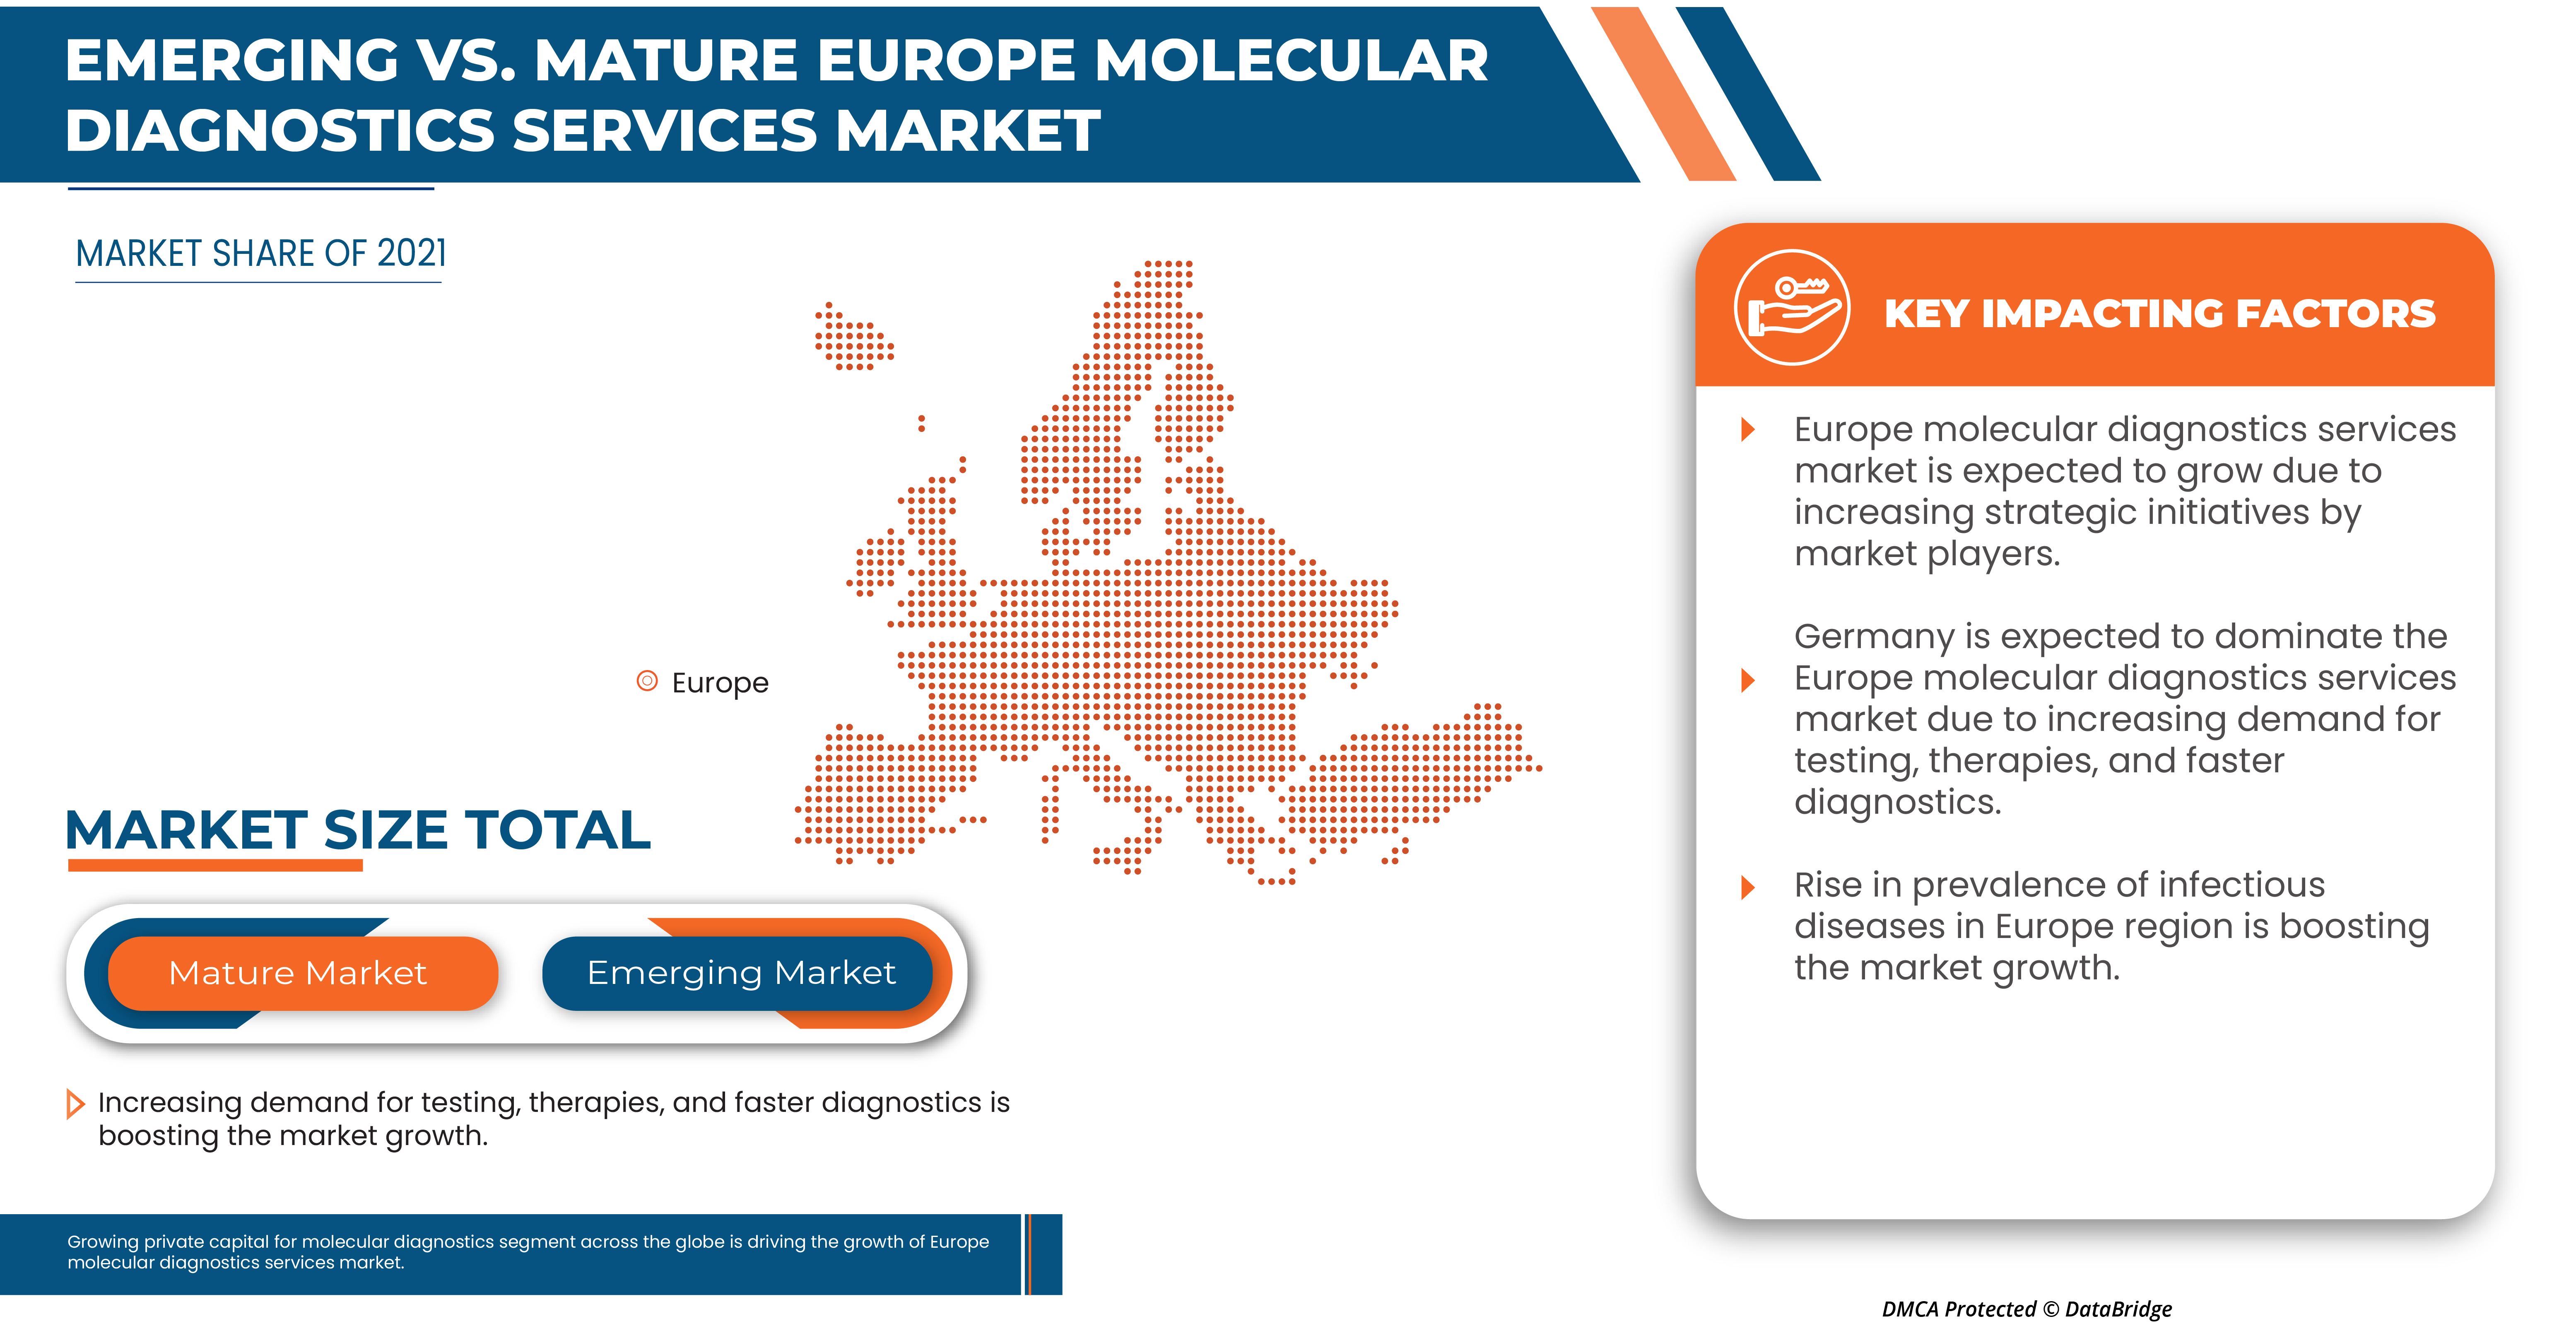 Europe Molecular Diagnostics Services Market